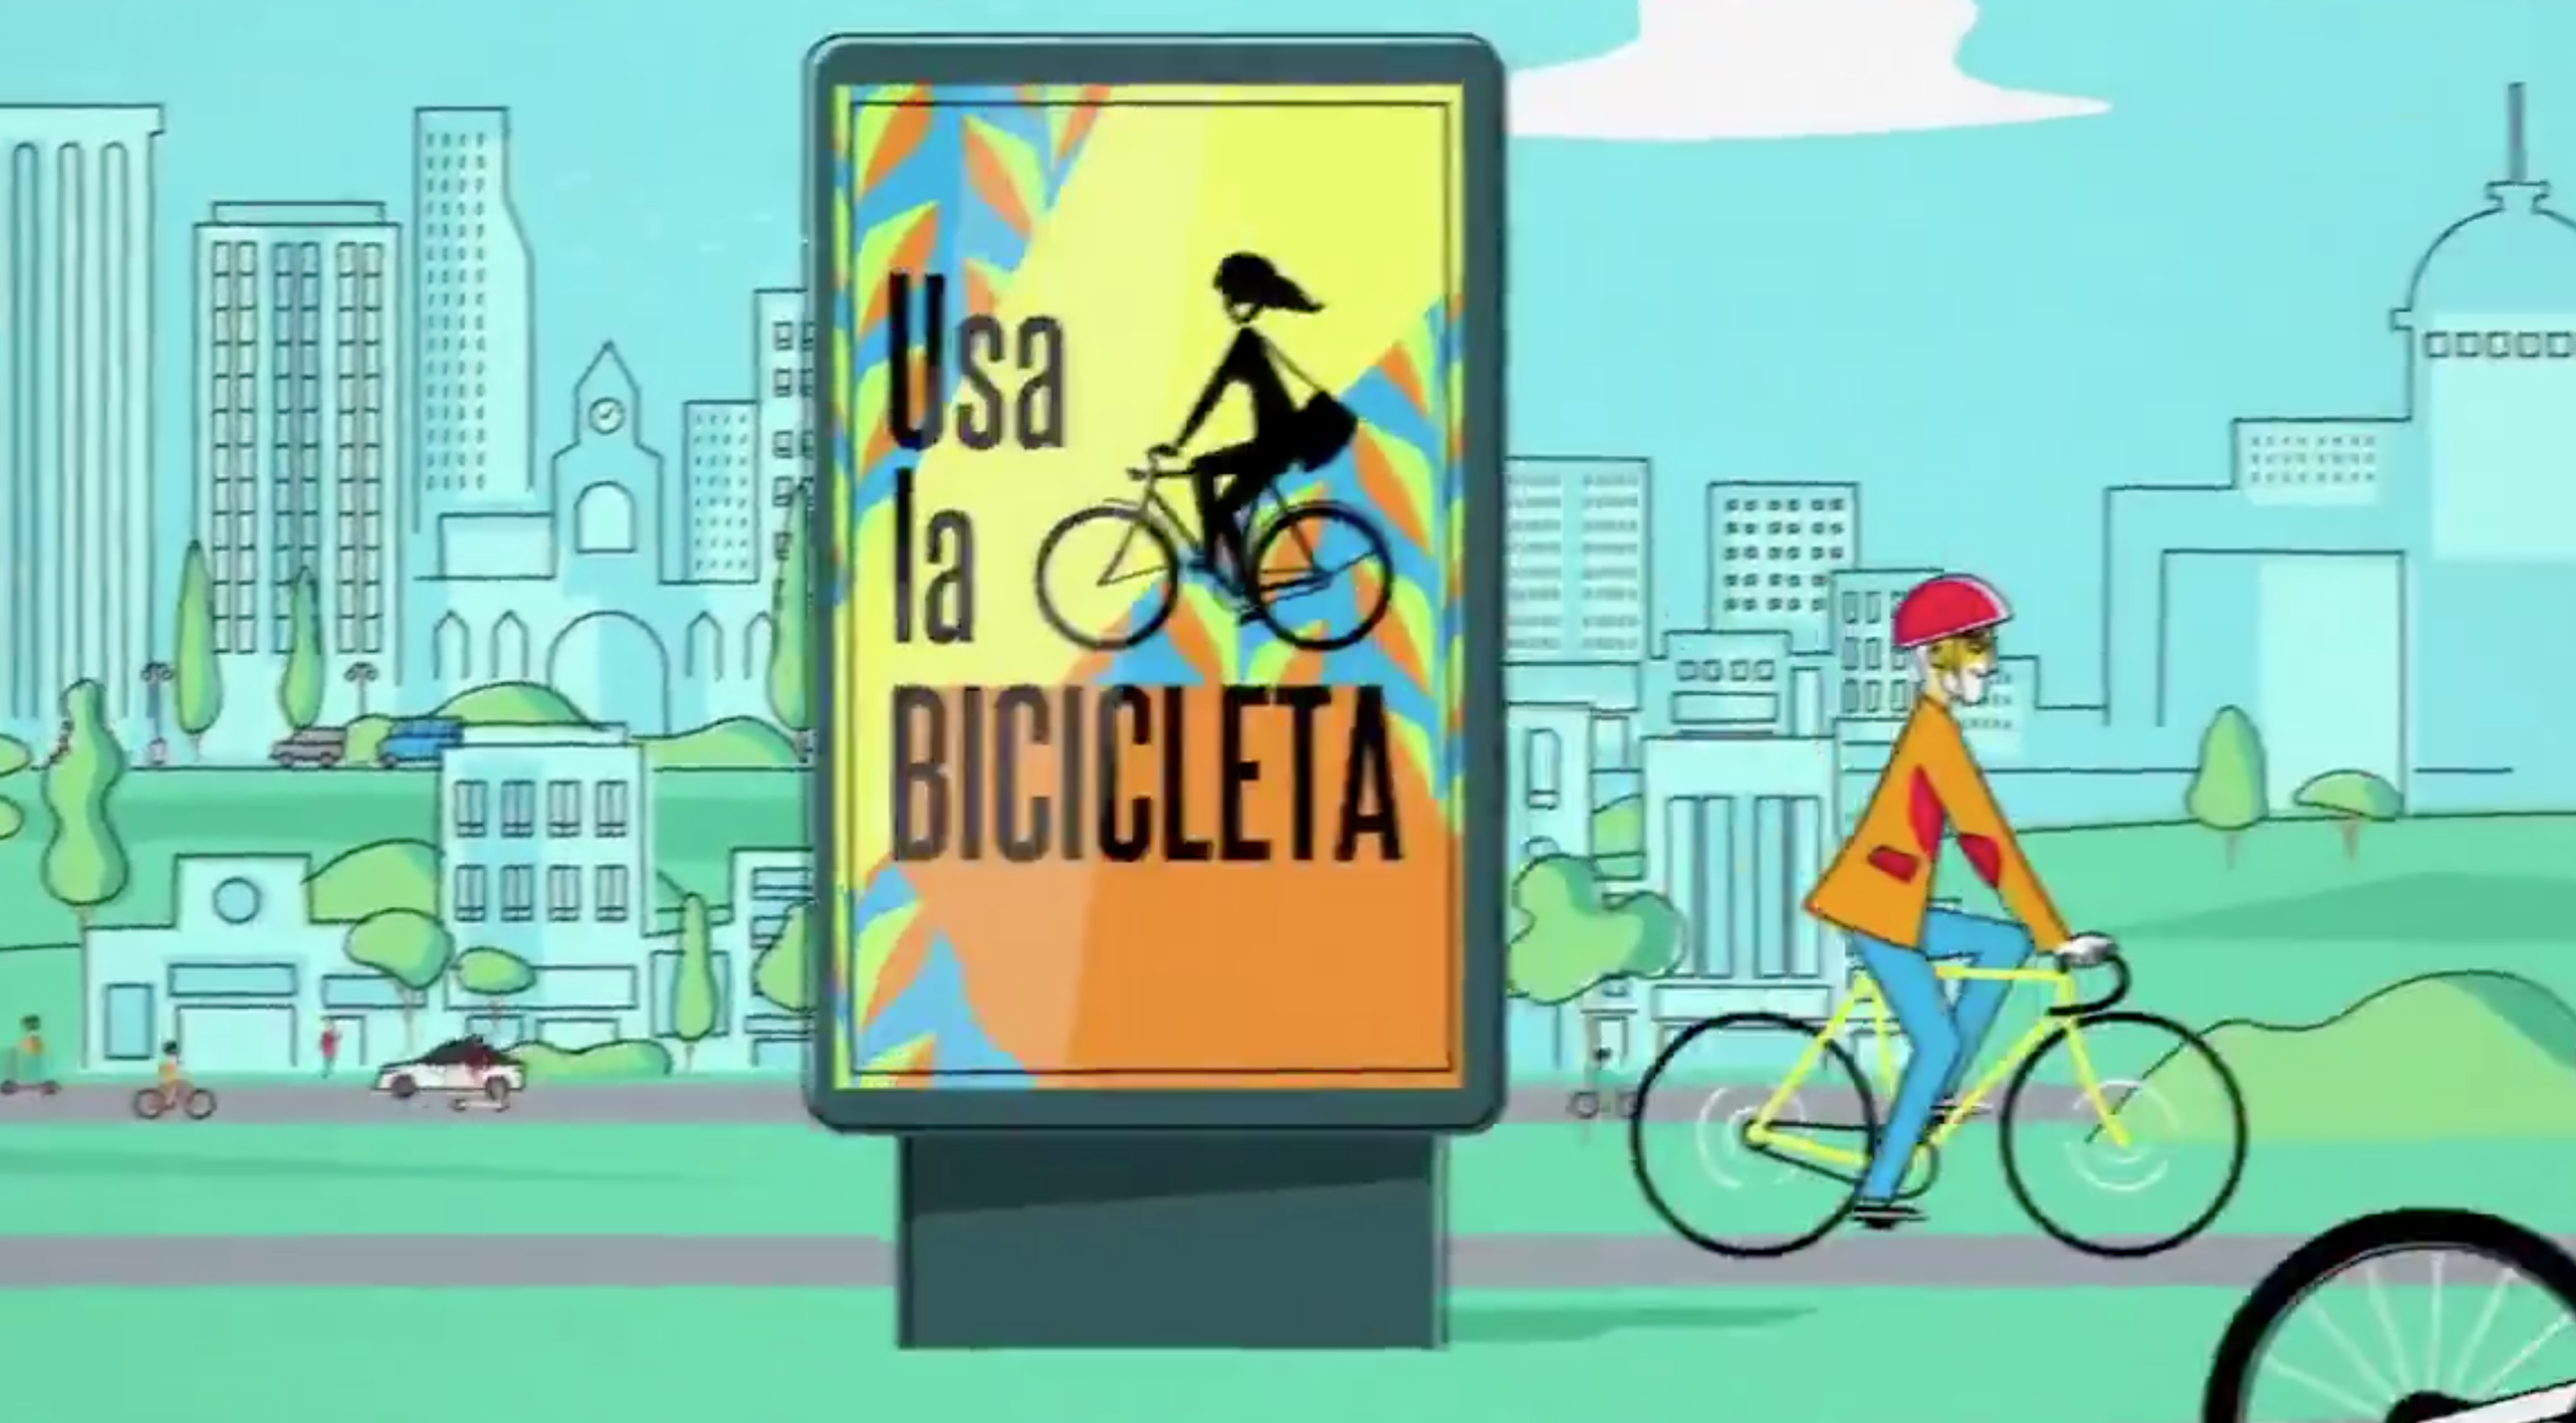 DGT uso bicicleta